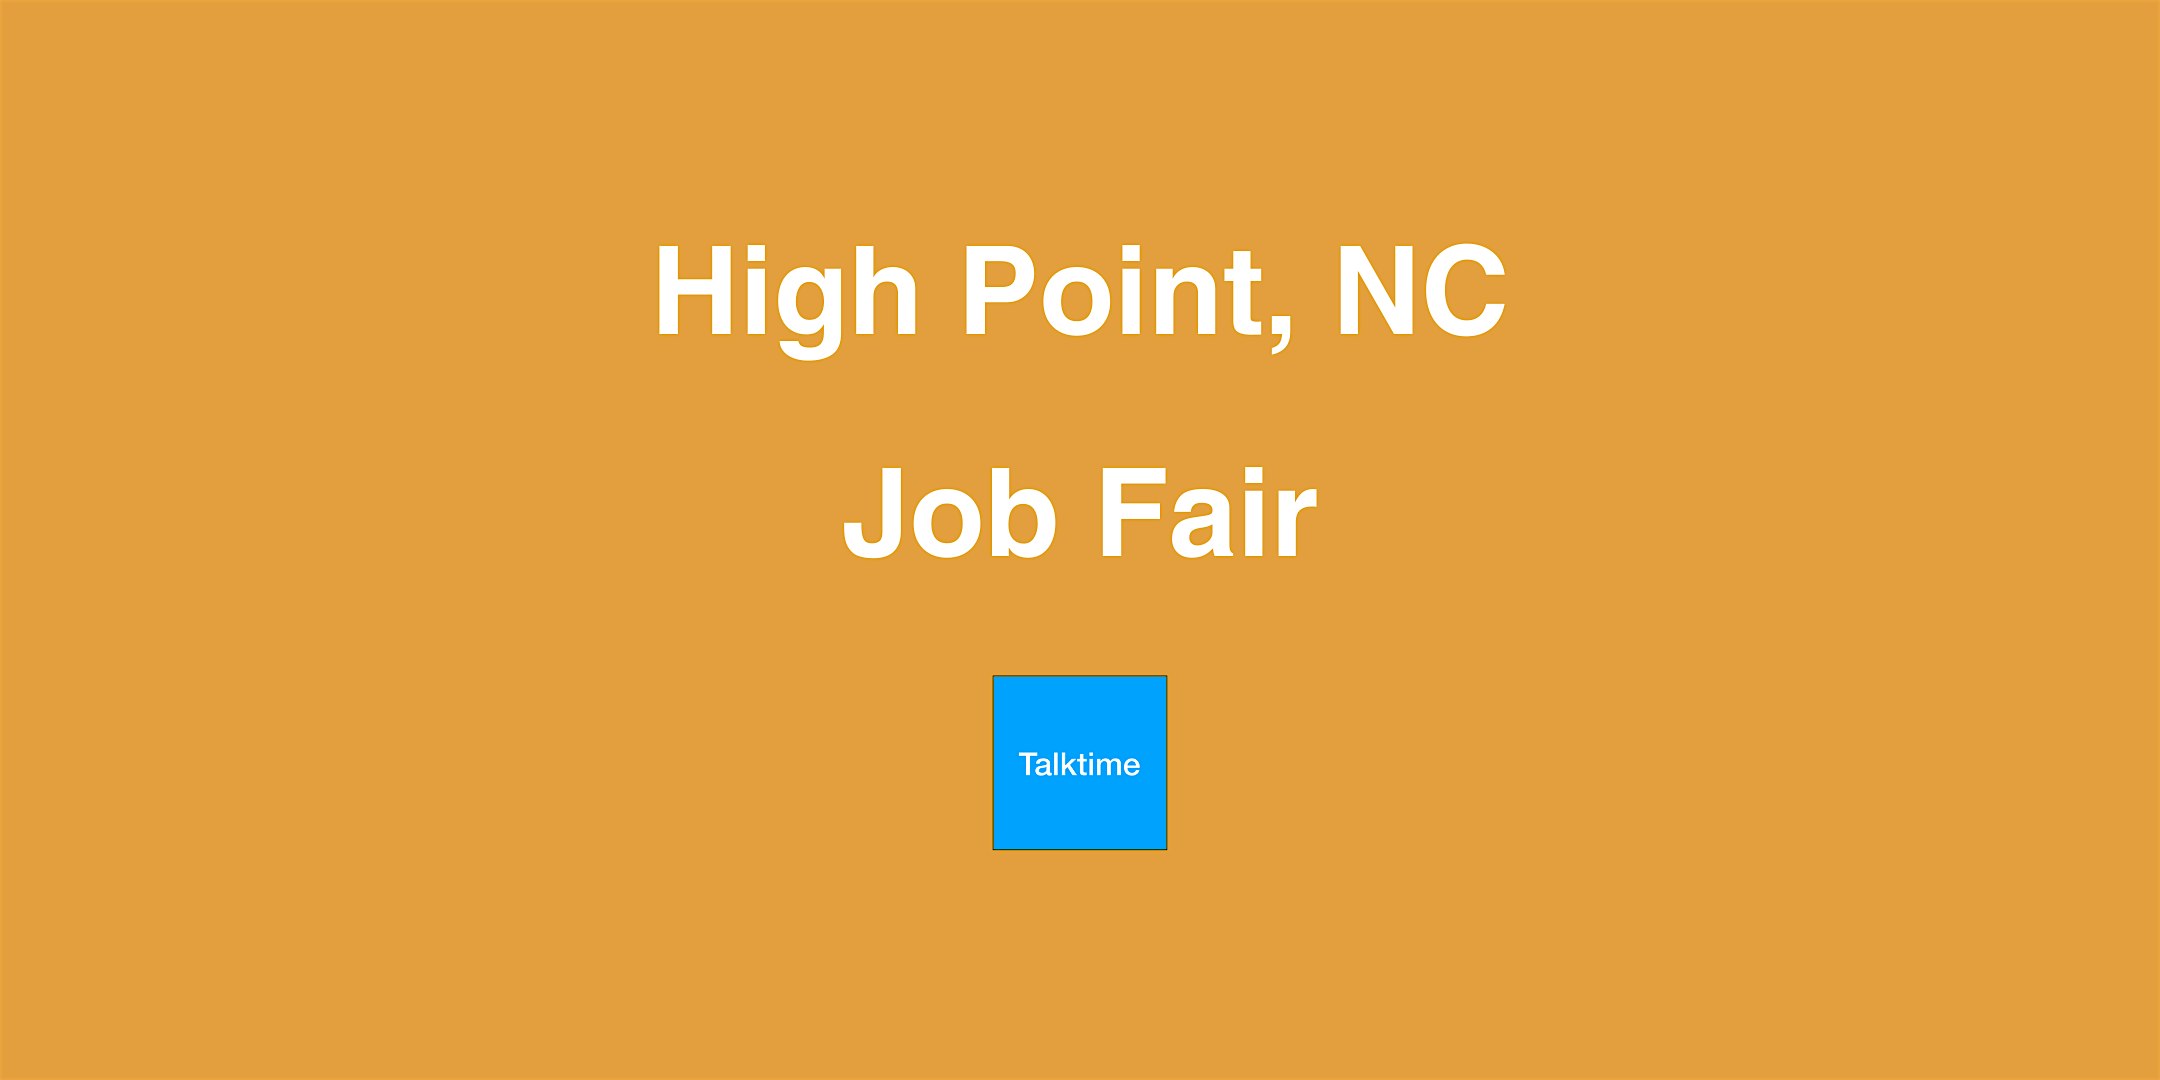 Job Fair - High Point